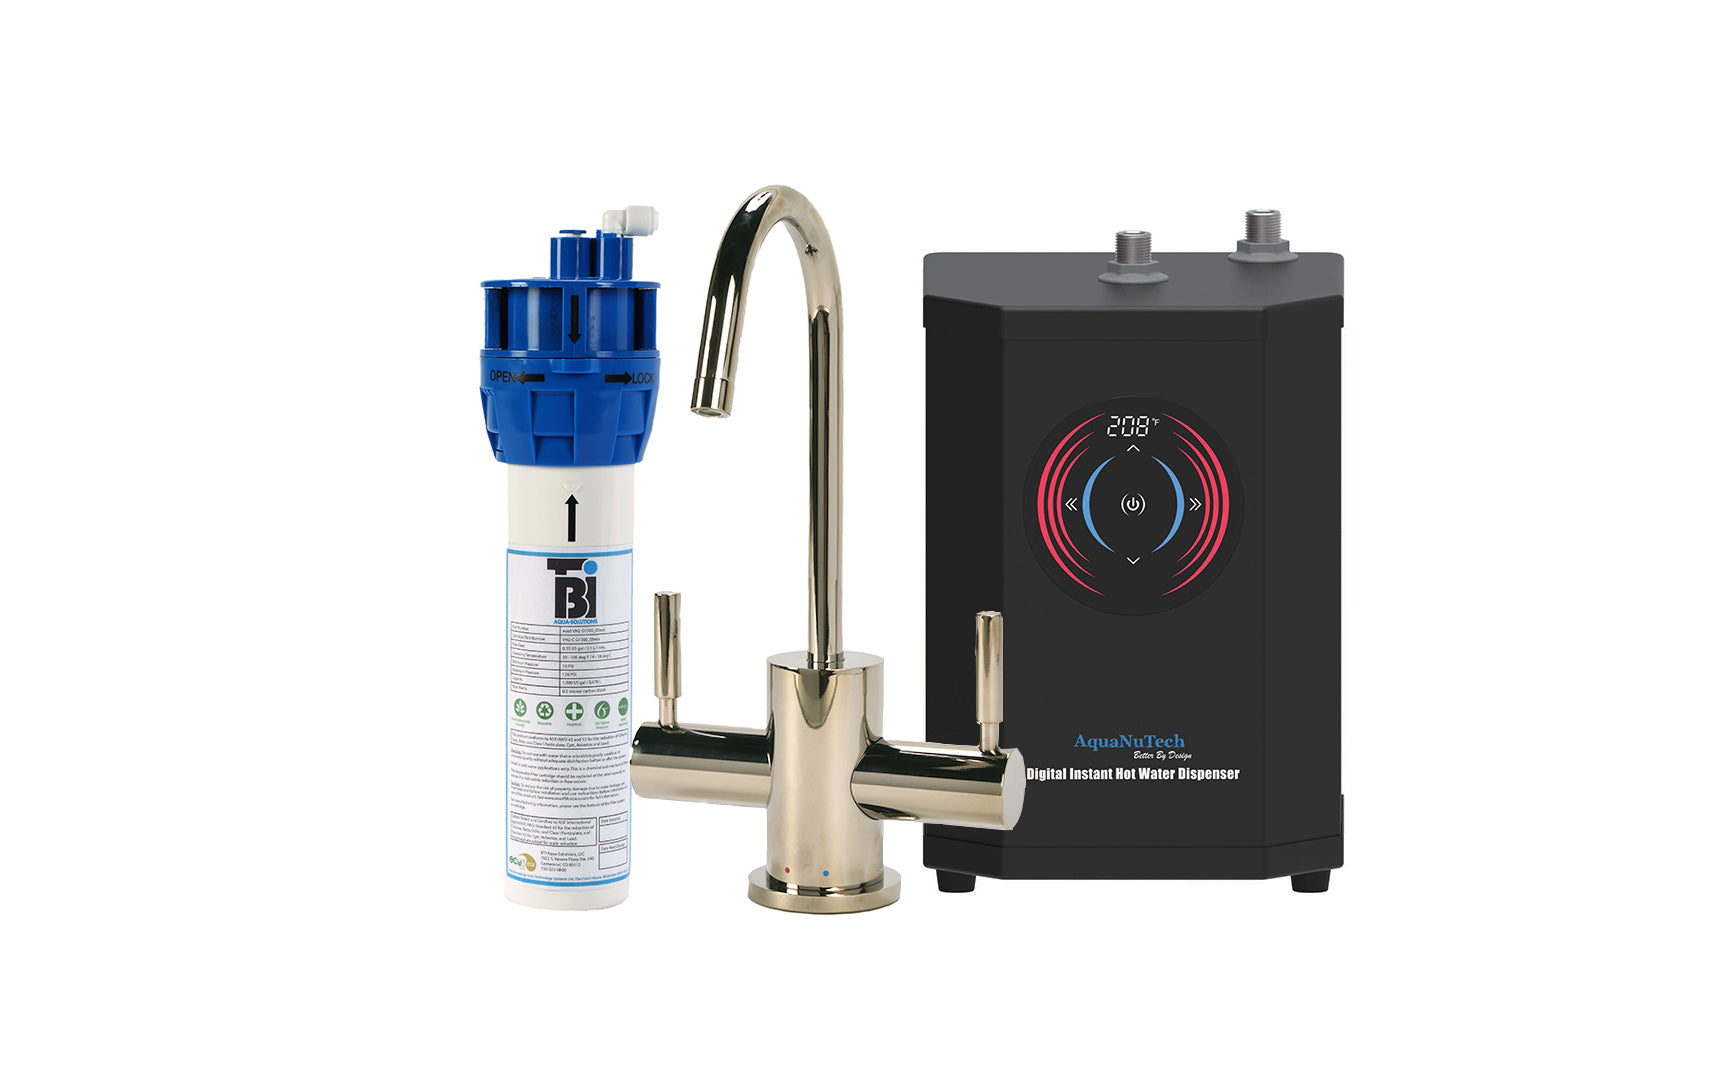 Filtration faucet, water filter, digital instant hot water dispenser package